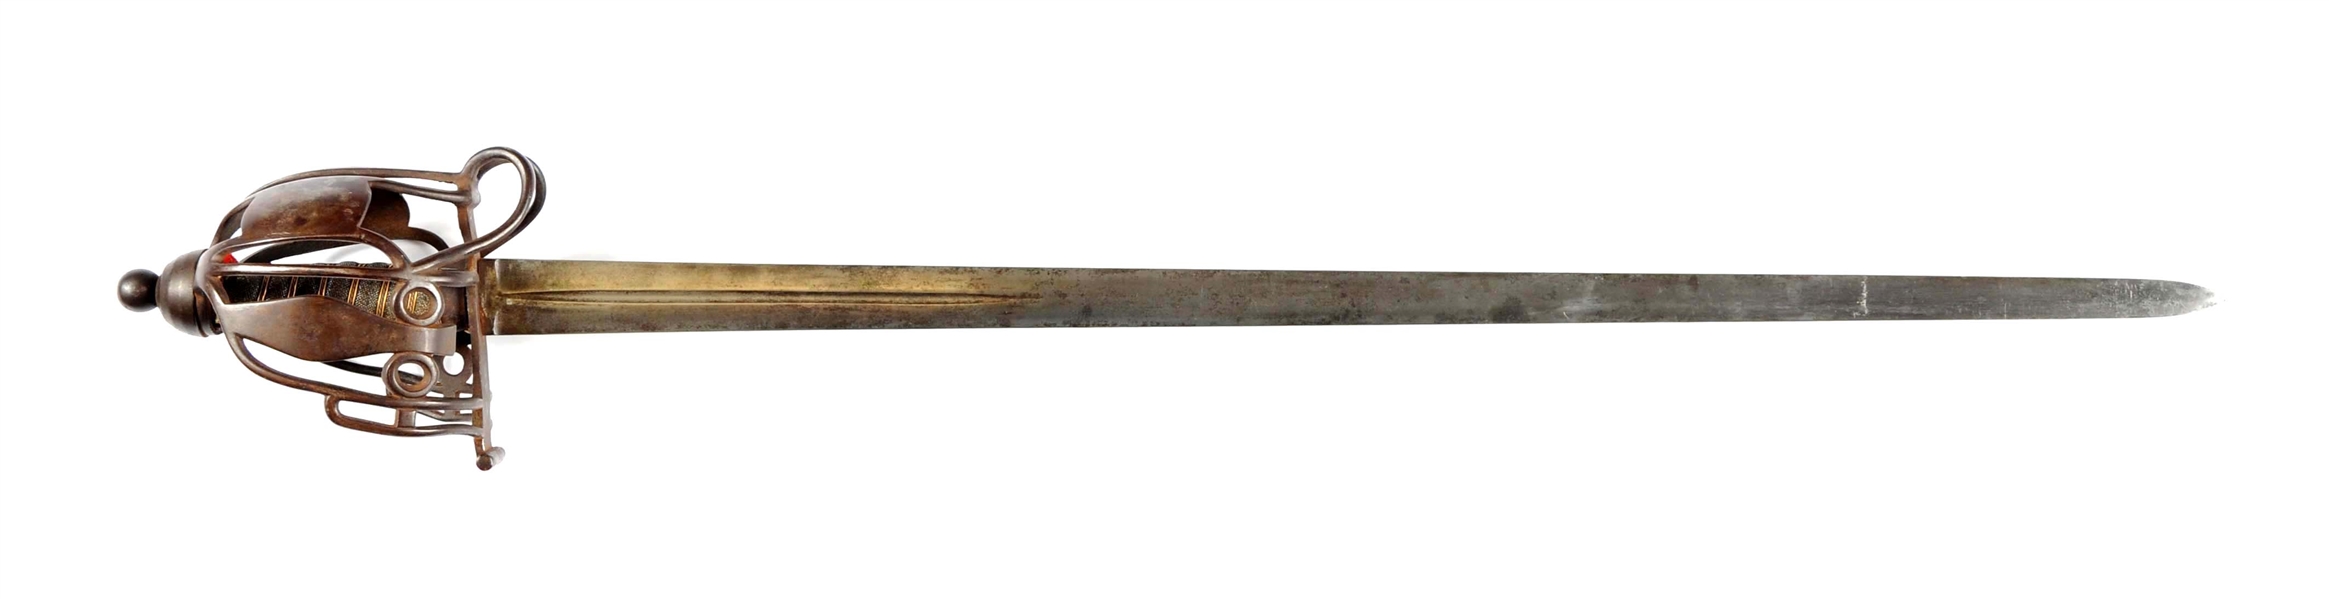 ENGLISH 18TH CENTURY BASKET HILT SWORD.